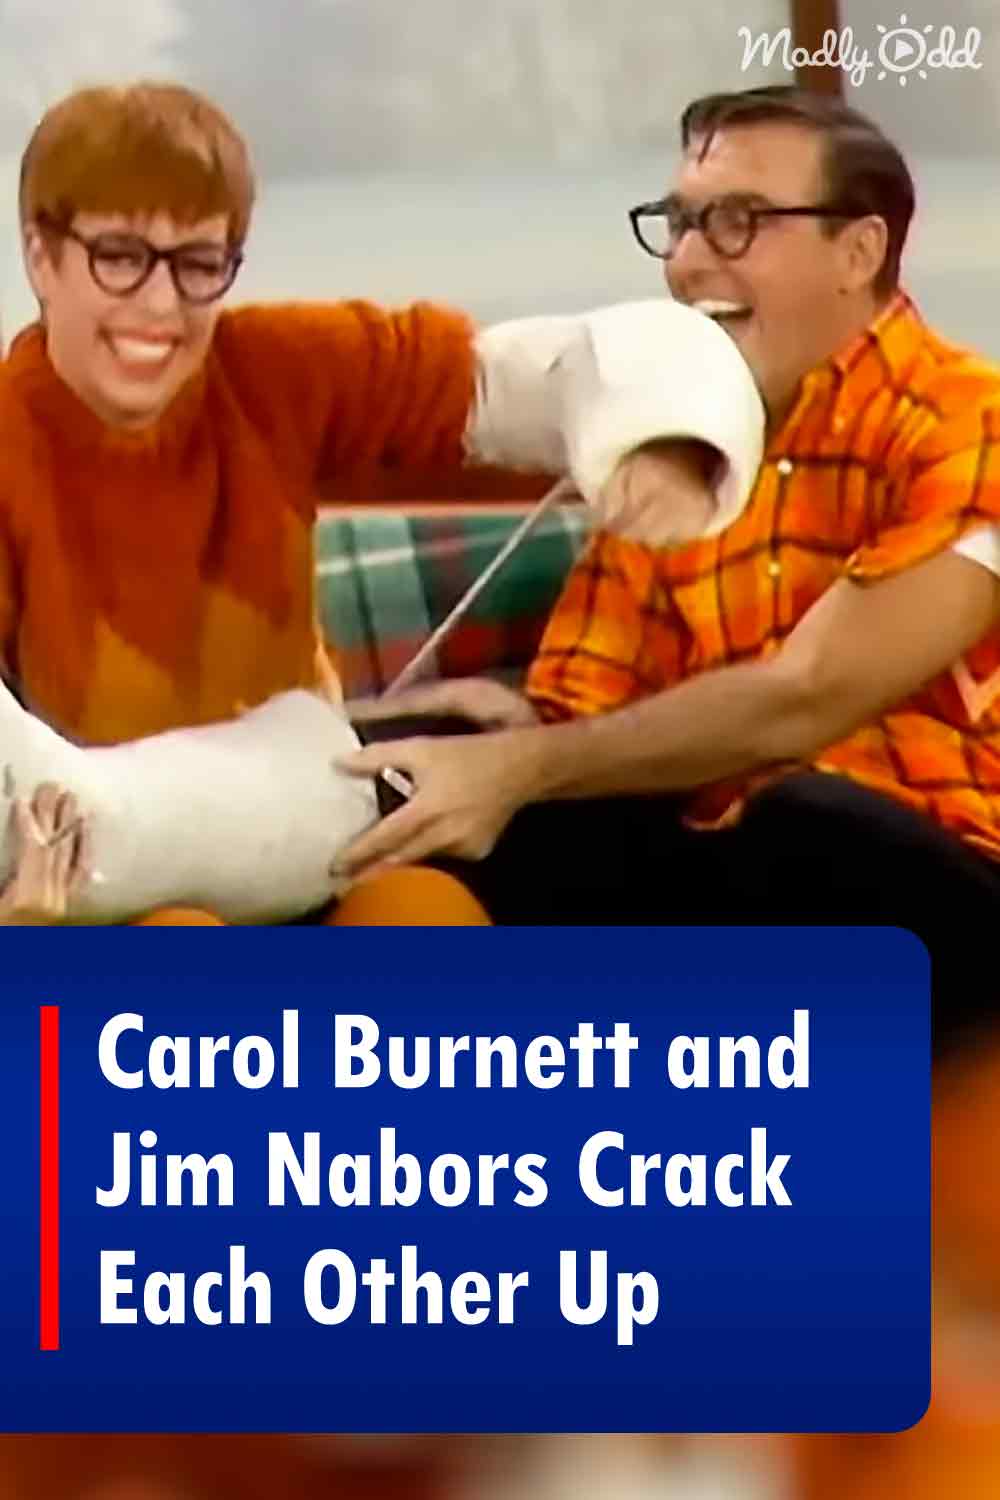 Carol Burnett and Jim Nabors Crack Each Other Up